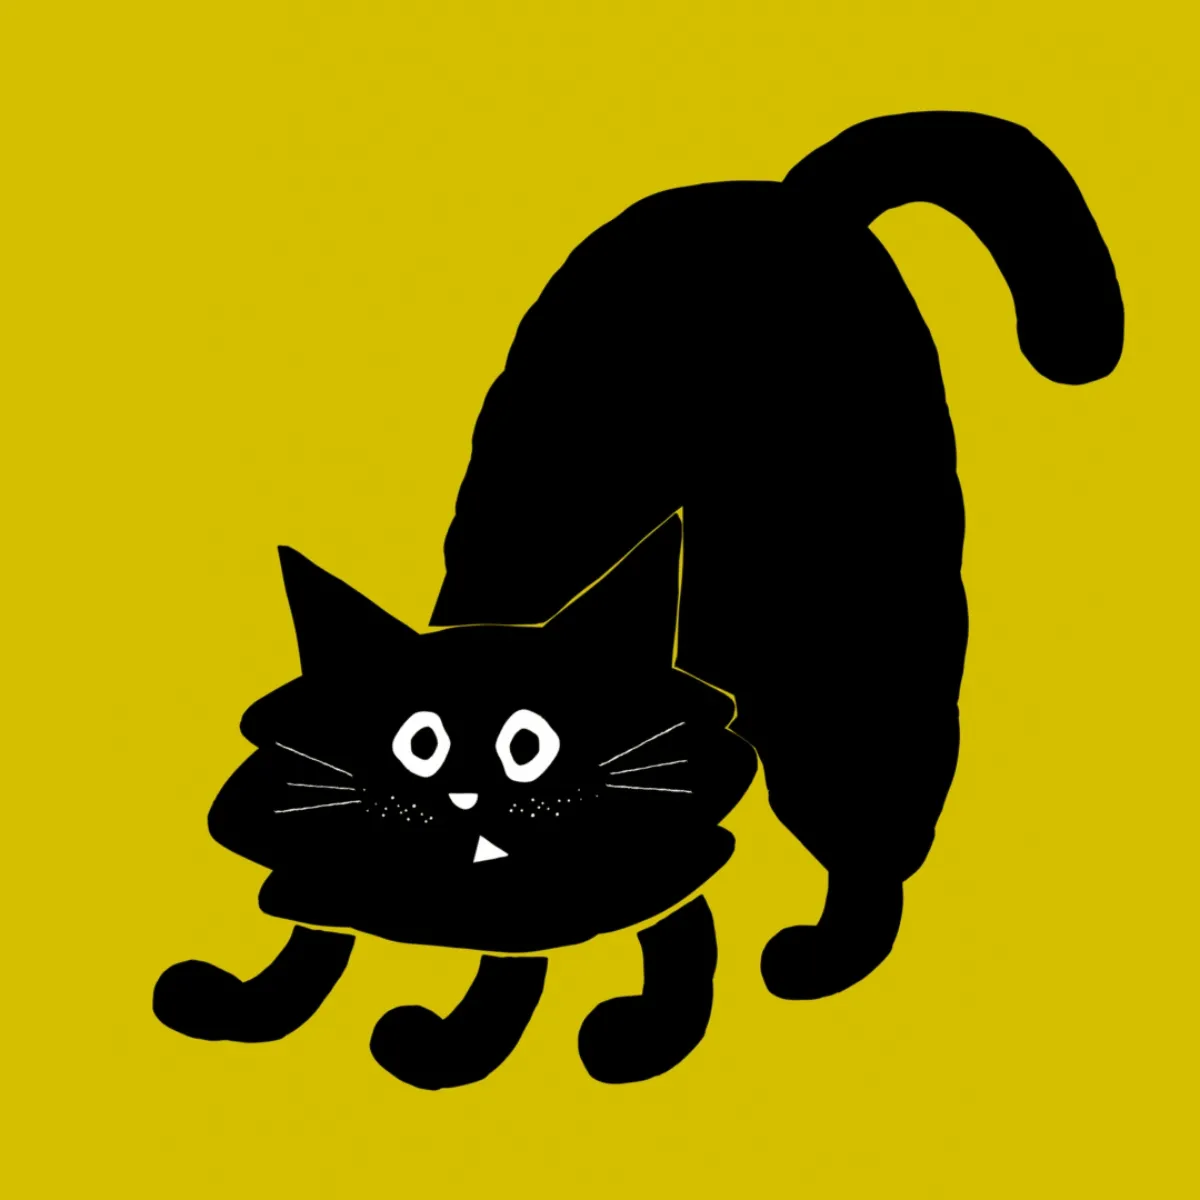 Black_Cat_WOW_Yellow